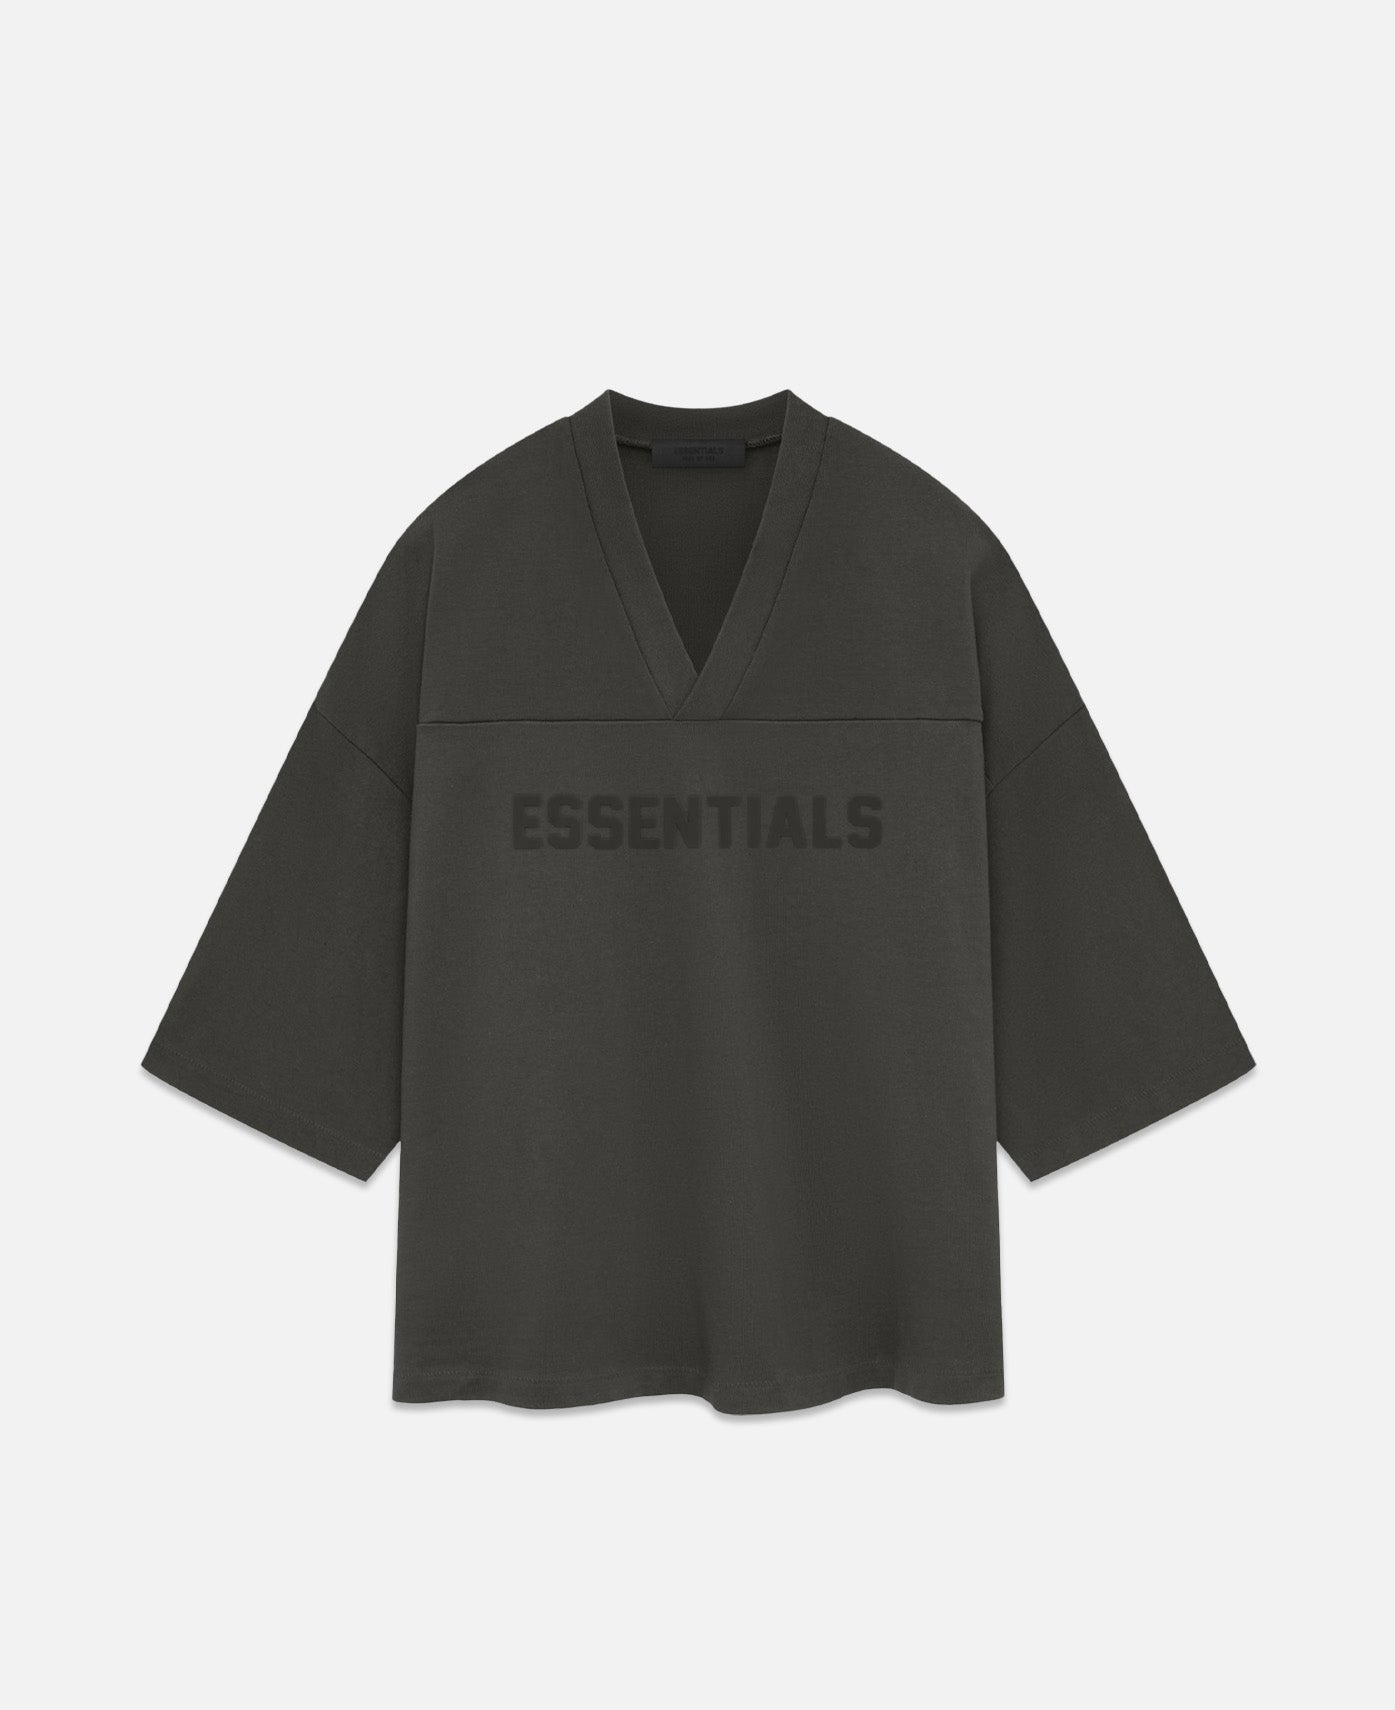 Football T-Shirt (Charcoal)